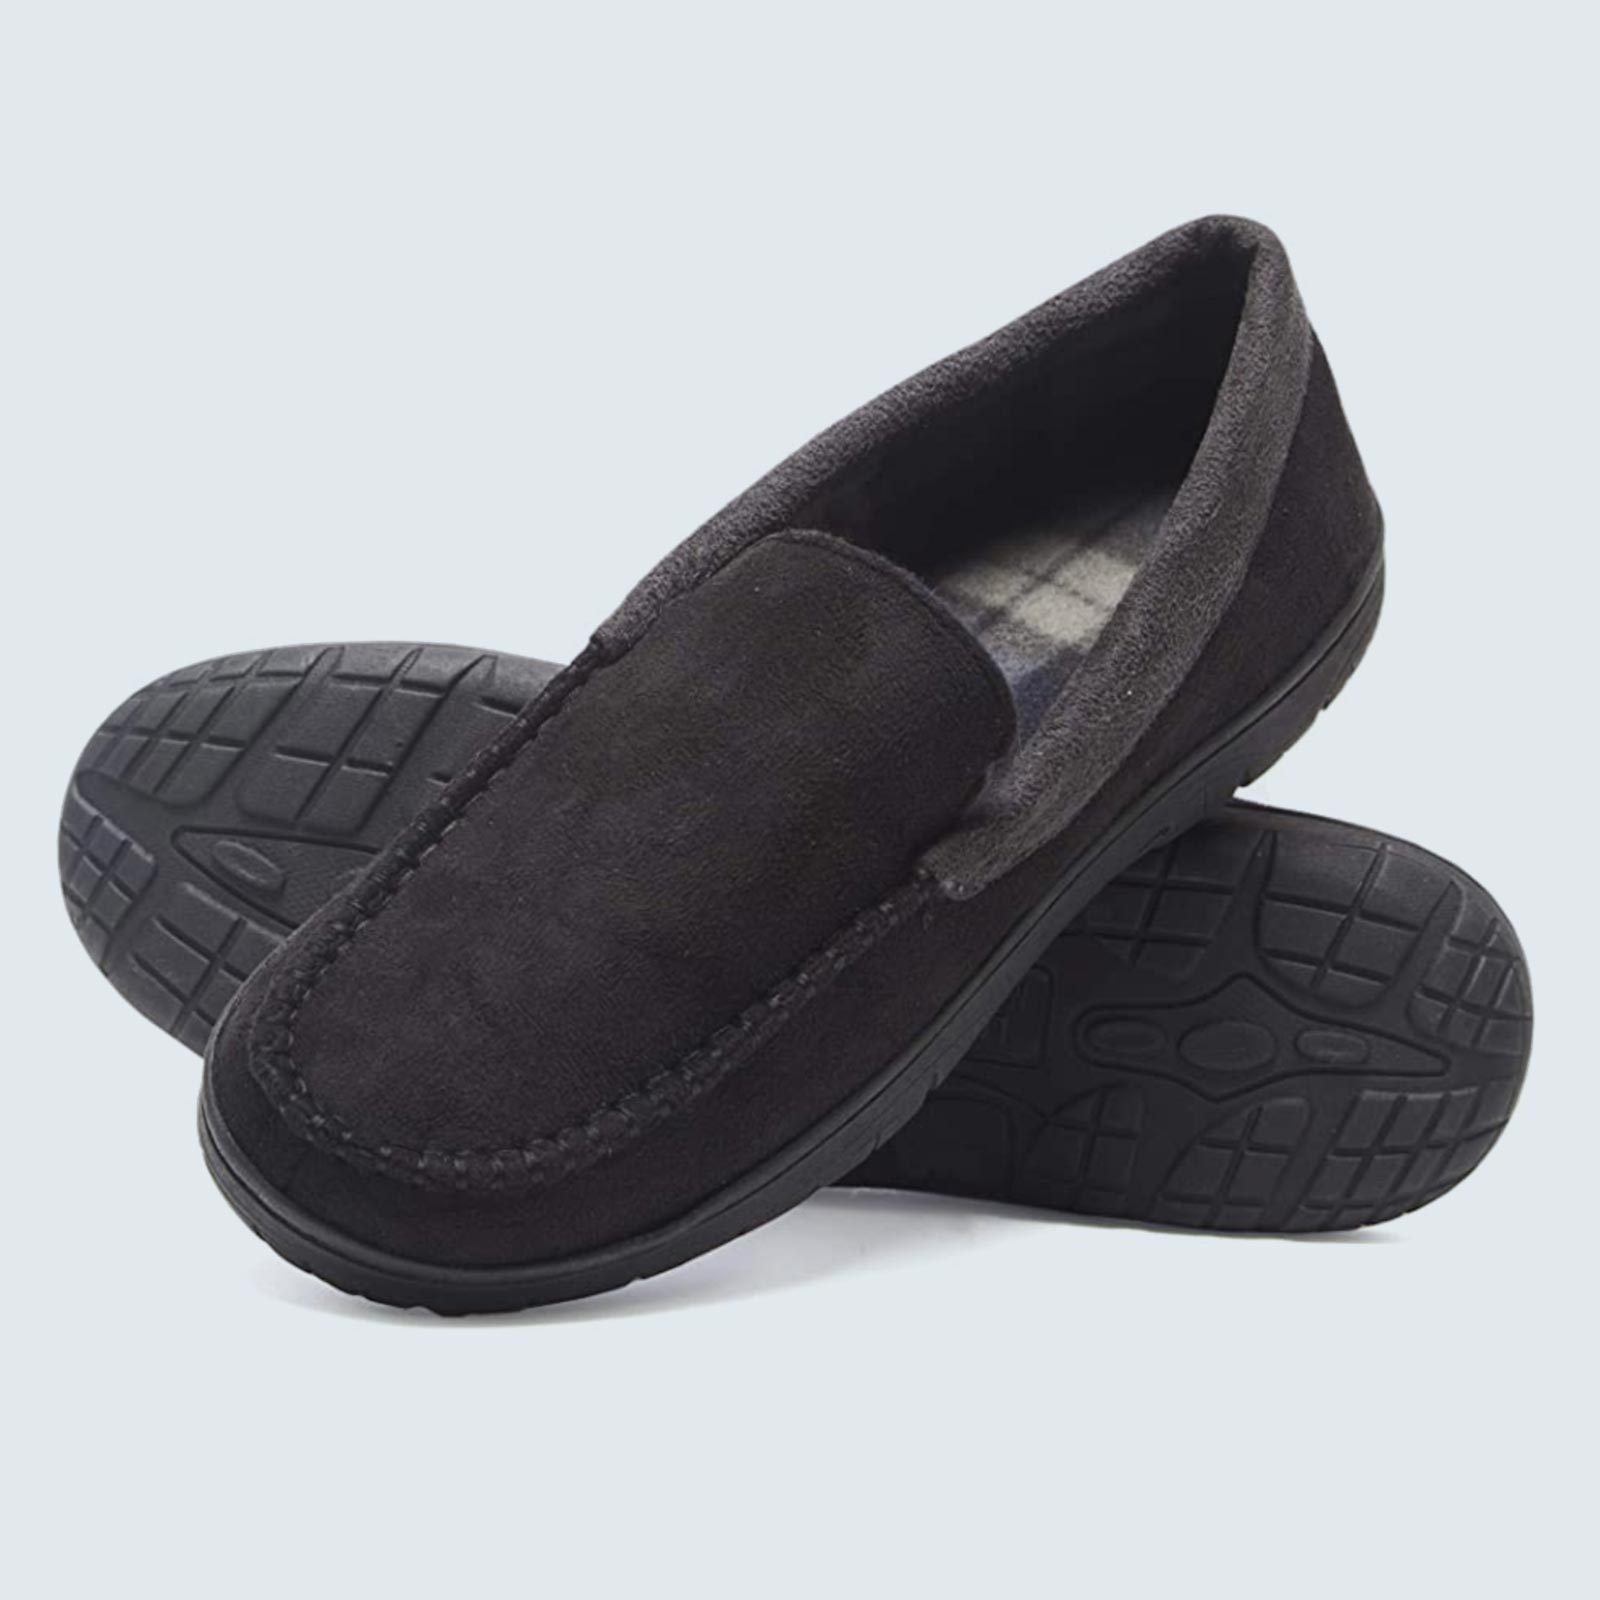 Best budget-friendly slippers: Hanes Moccasin Slipper